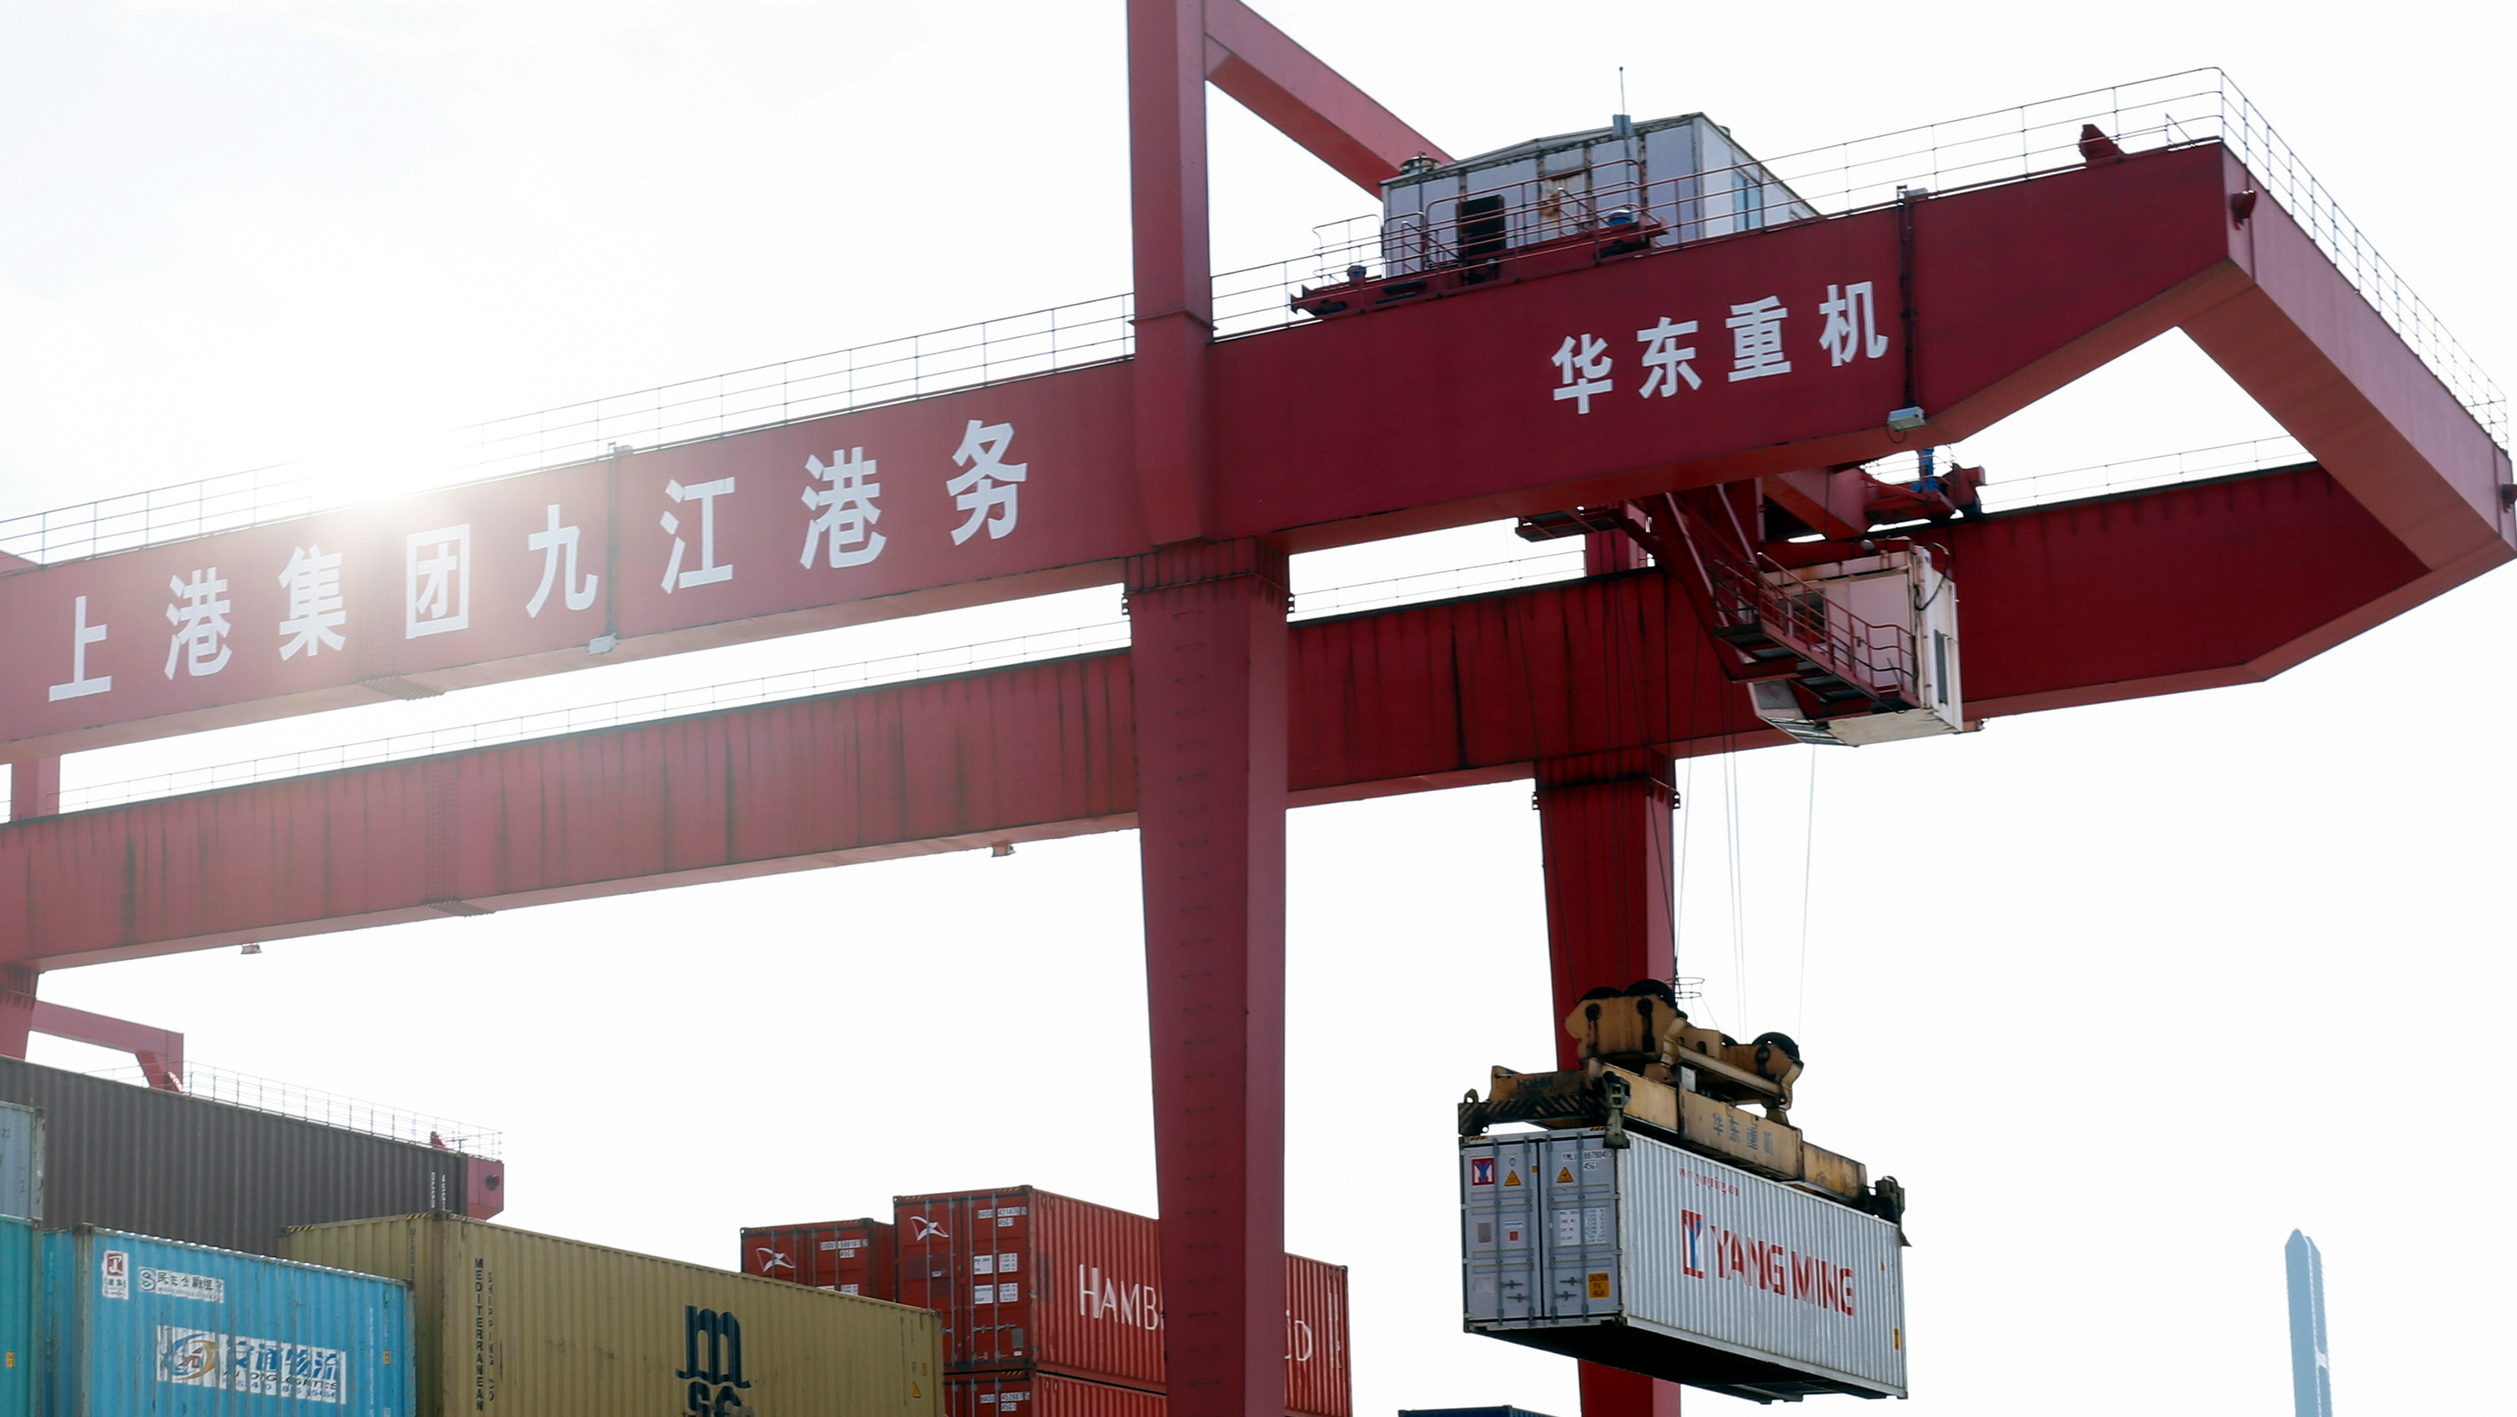 21-04-2020 Imagen de una grupo portando un contenedor en un puerto en China.
POLITICA ESPAÑA EUROPA ANDALUCÍA ECONOMIA EMPRESAS
EXTENDA
